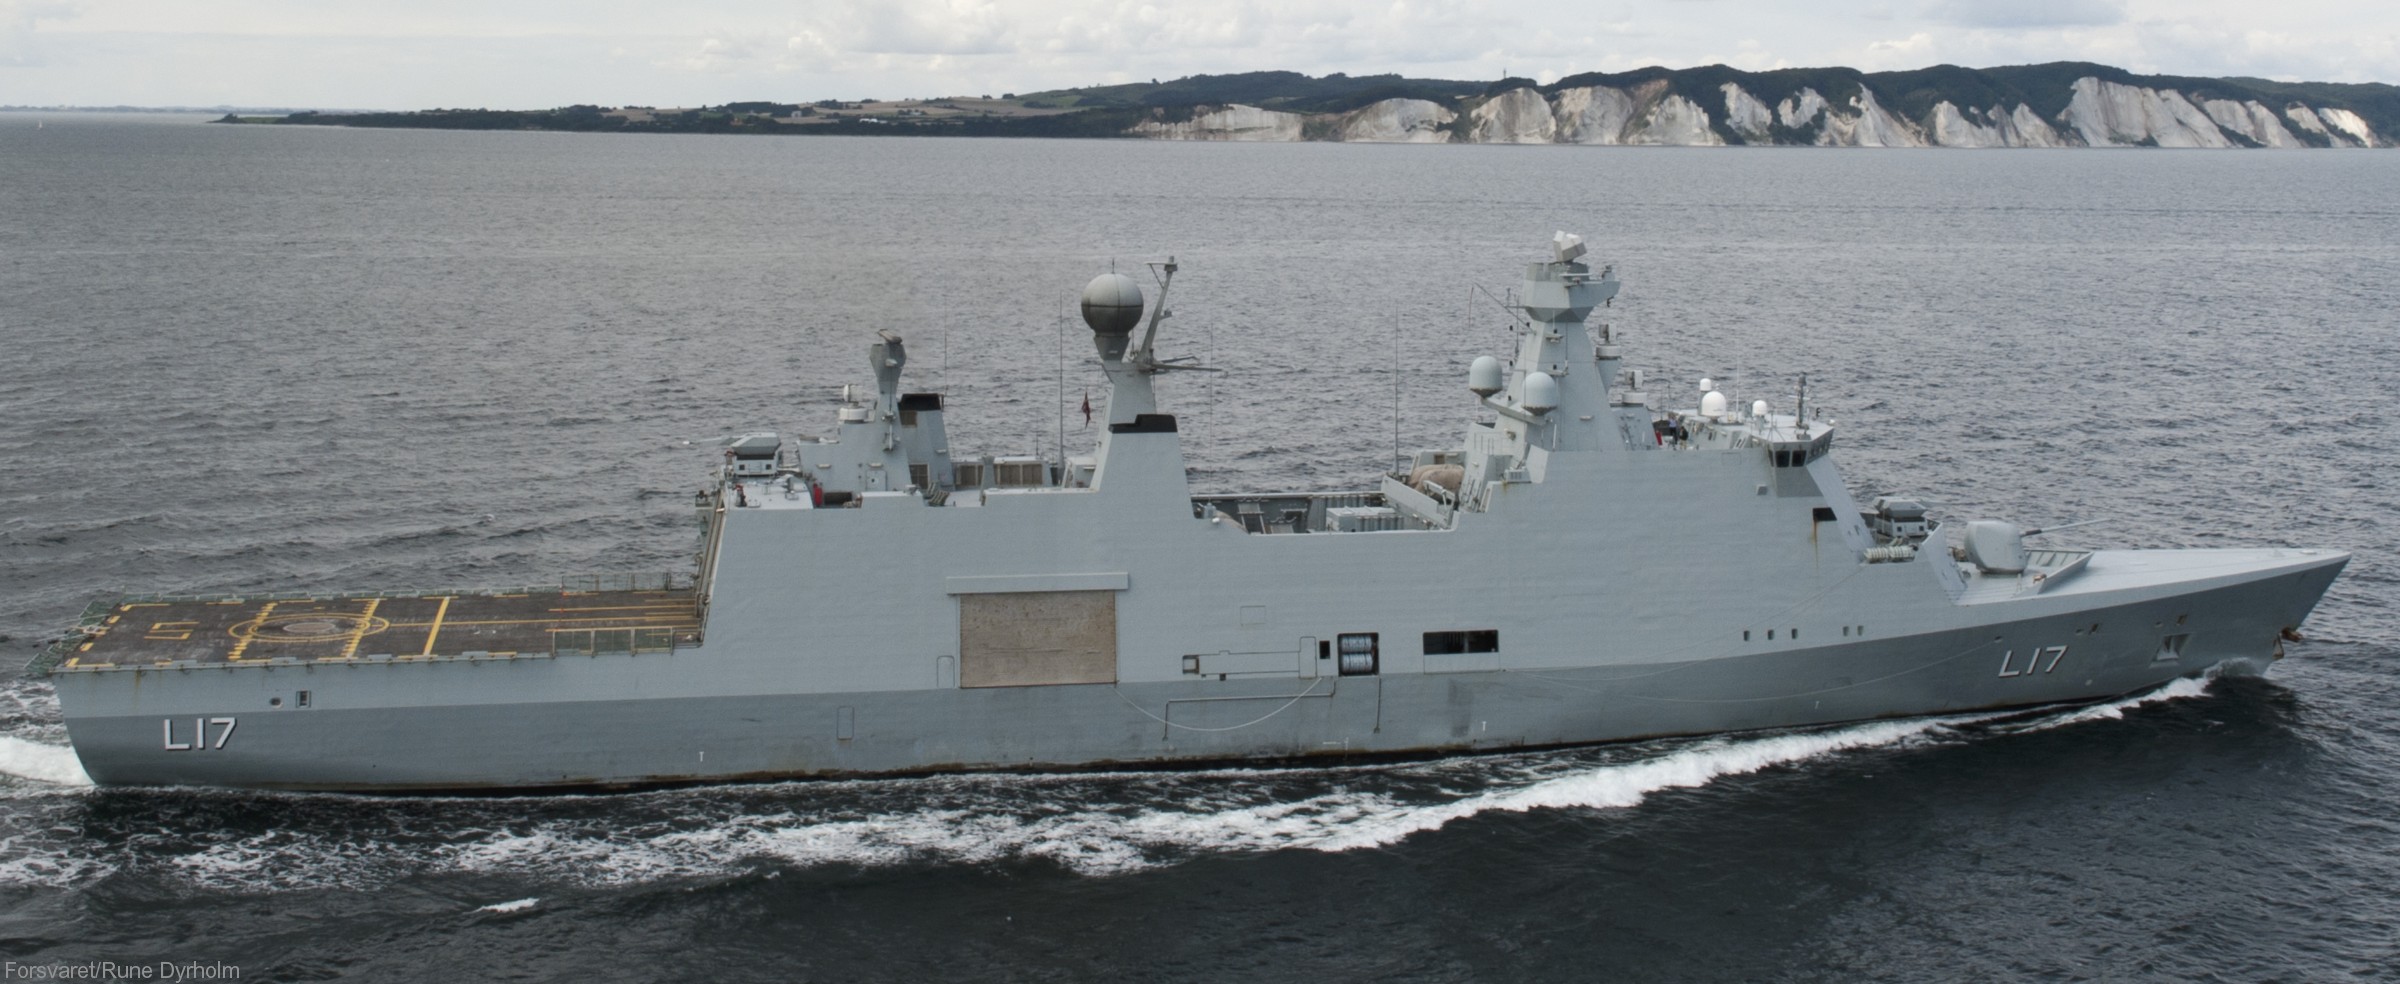 f-342 hdms esbern snare l-17 frigate command support ship royal danish navy 67